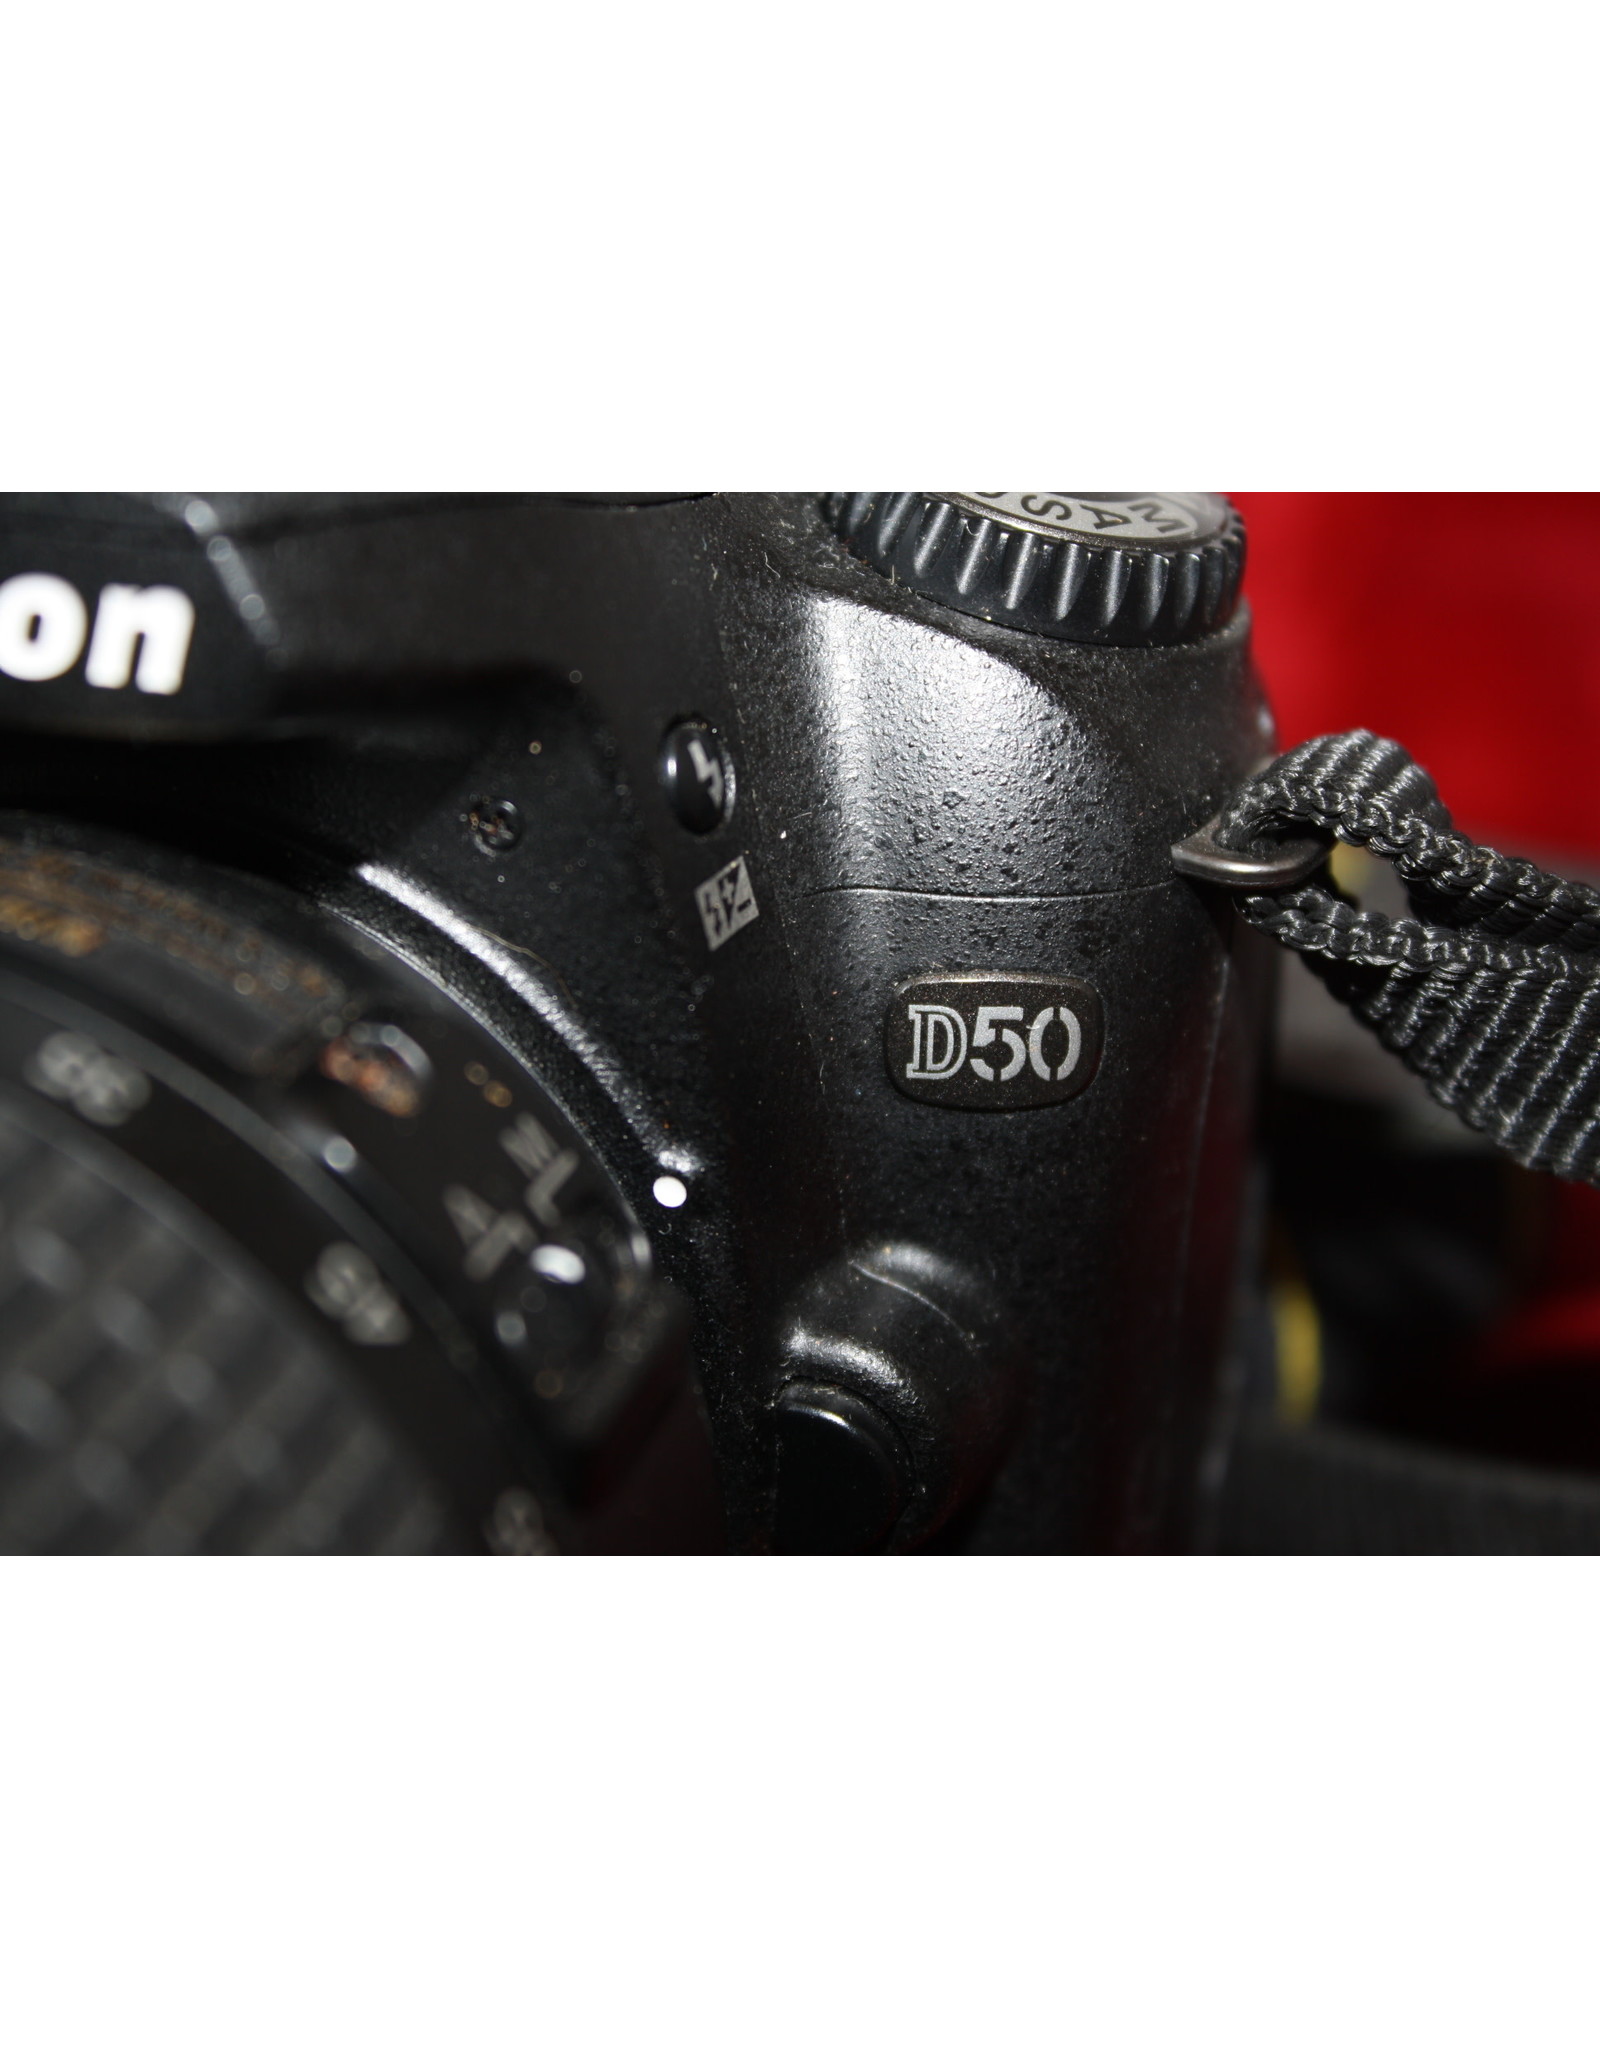 Nikon D D50 6.1MP Digital SLR Camera with 18-55mm Lens